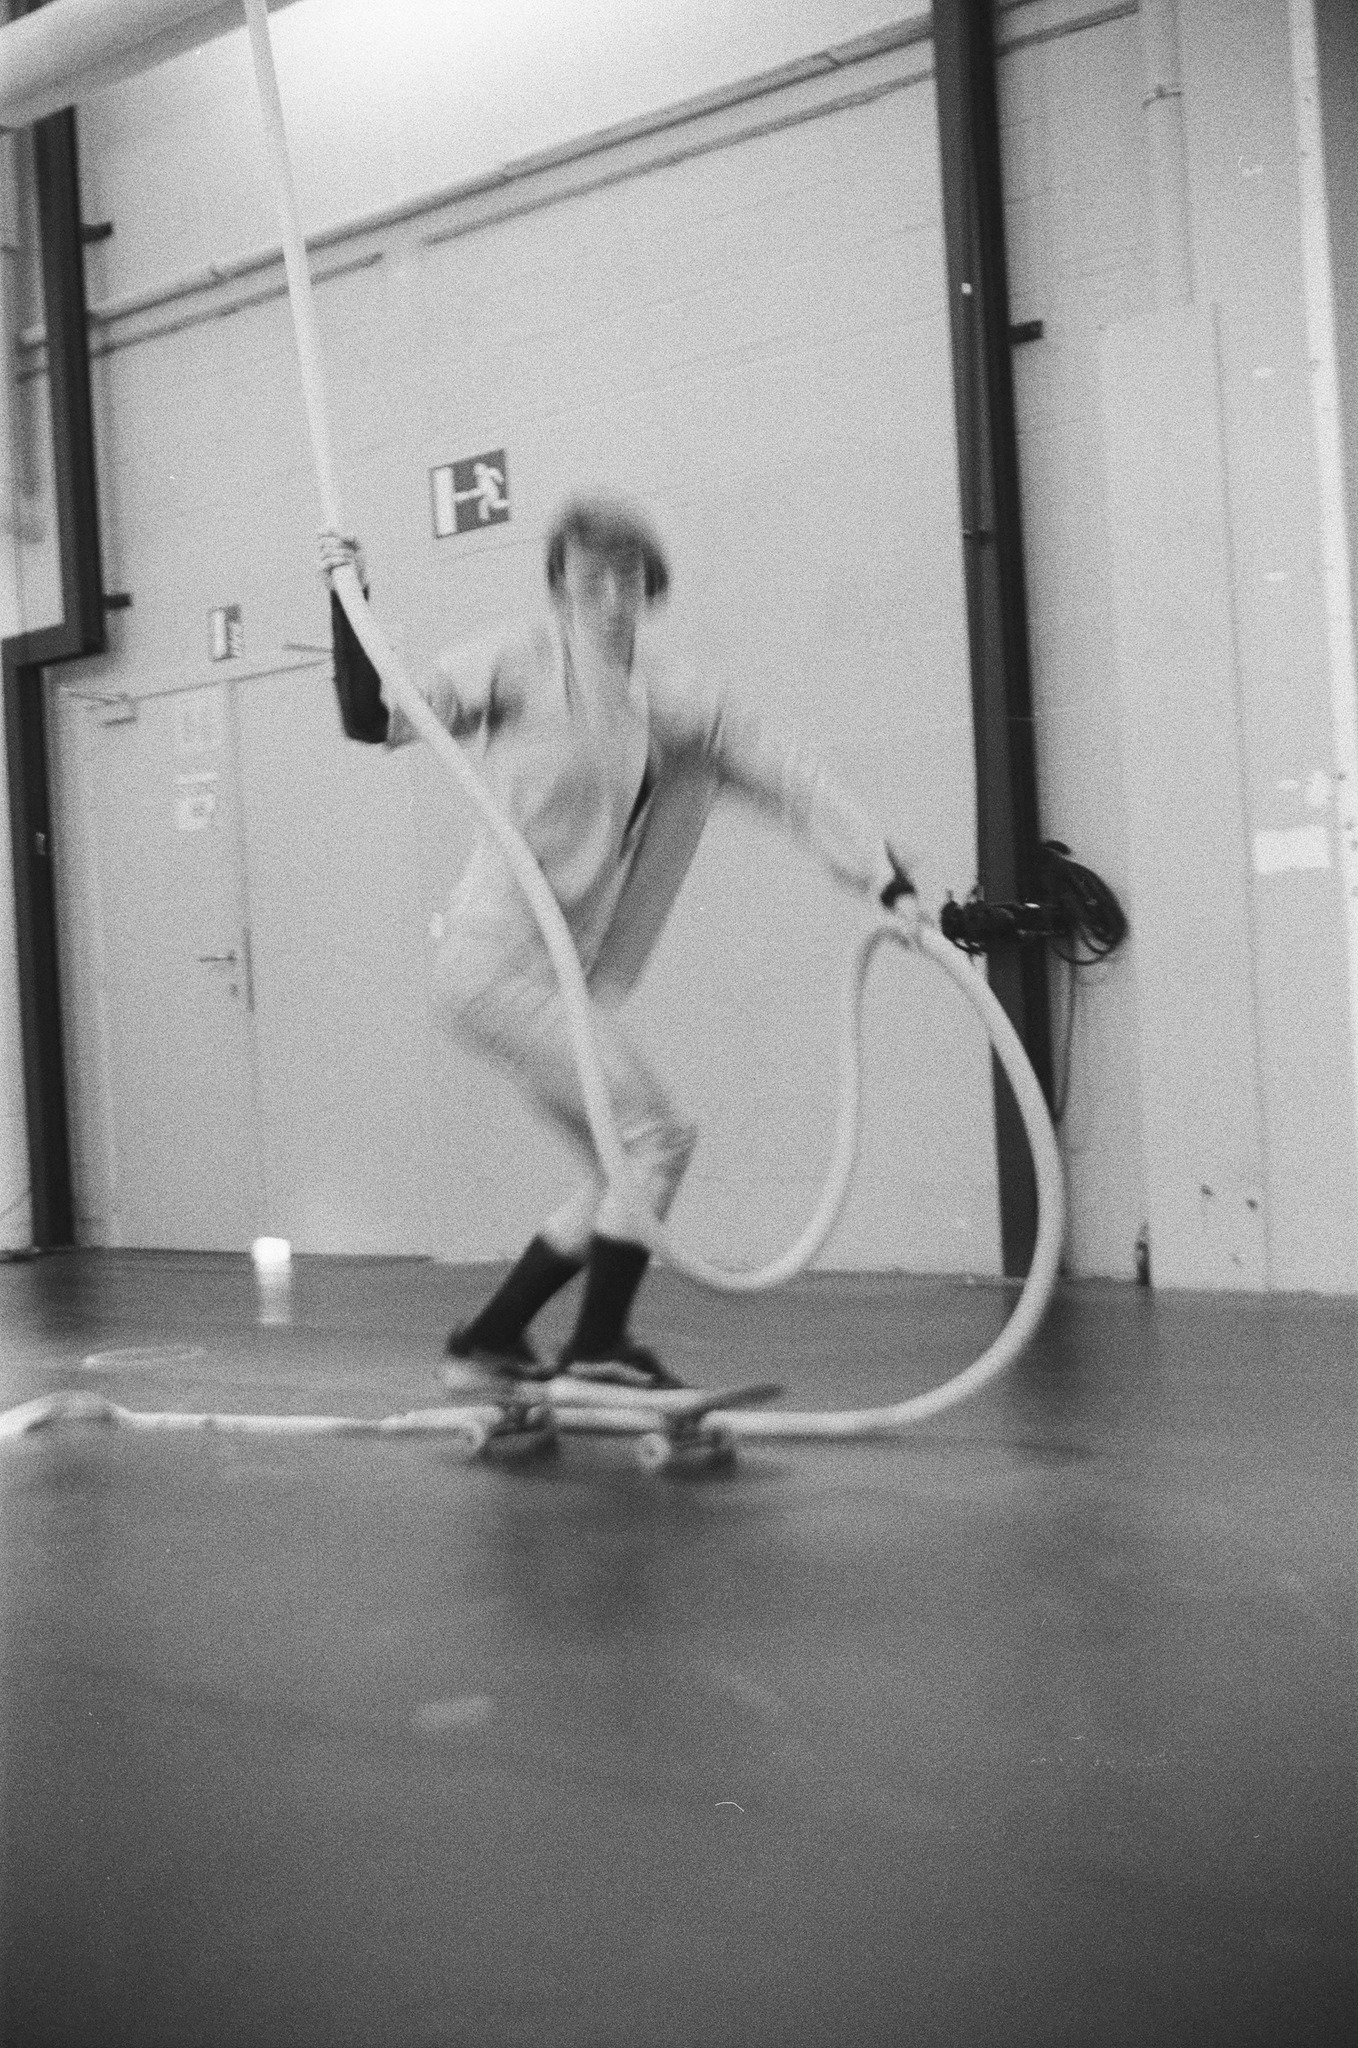 @ UP Circus & Performing Arts - Rope and skate work - Elisa Oliva